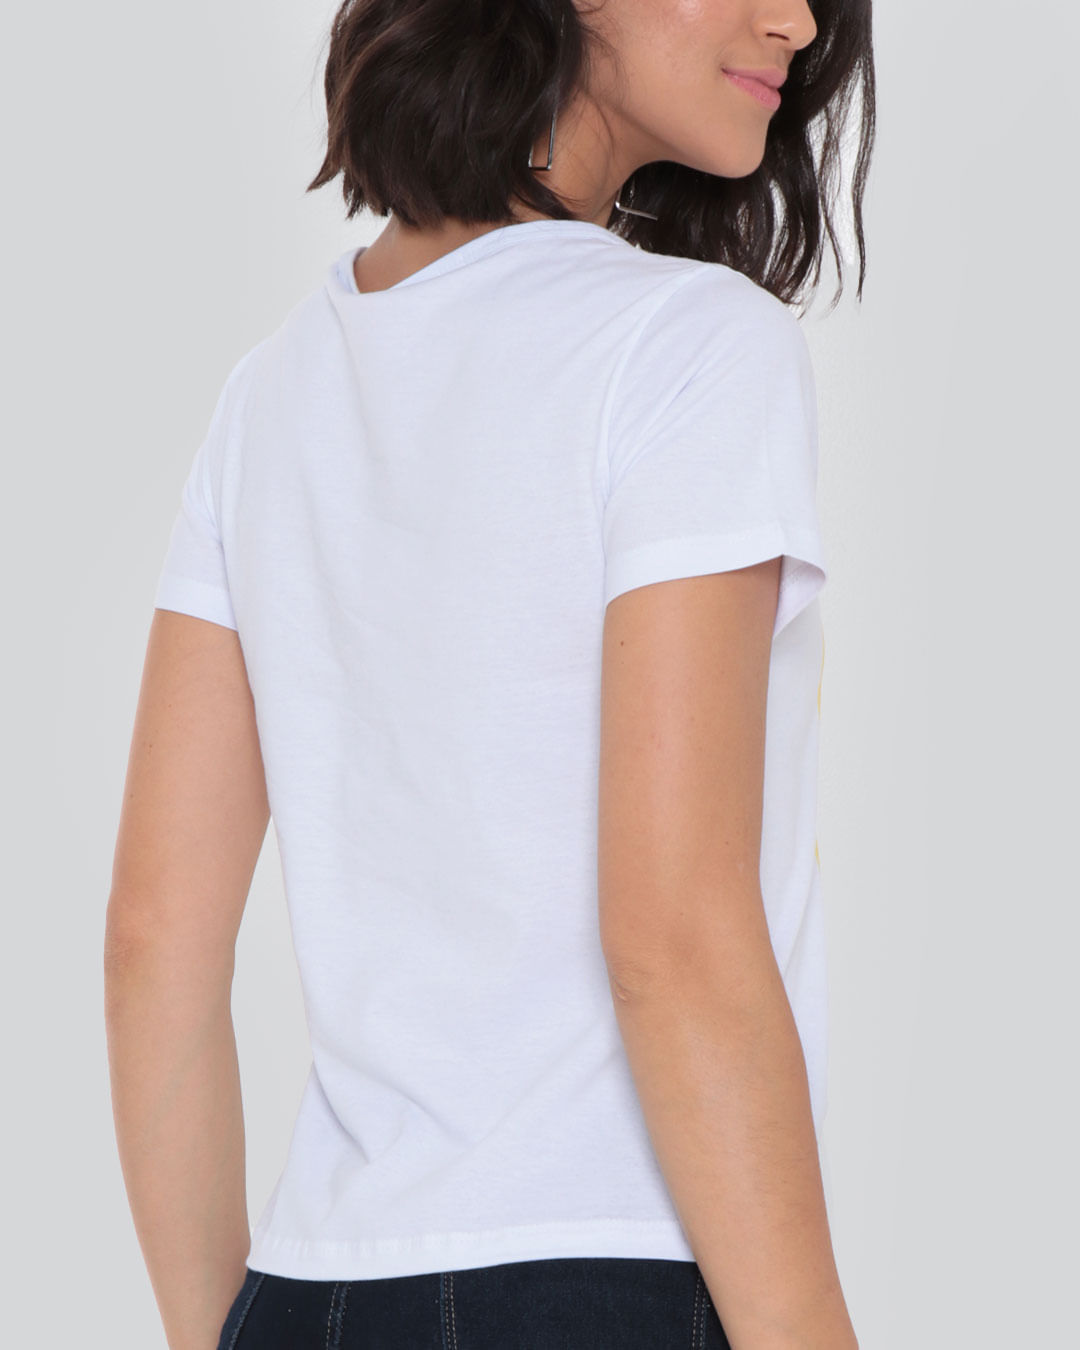 T-shirt branca mk mulher